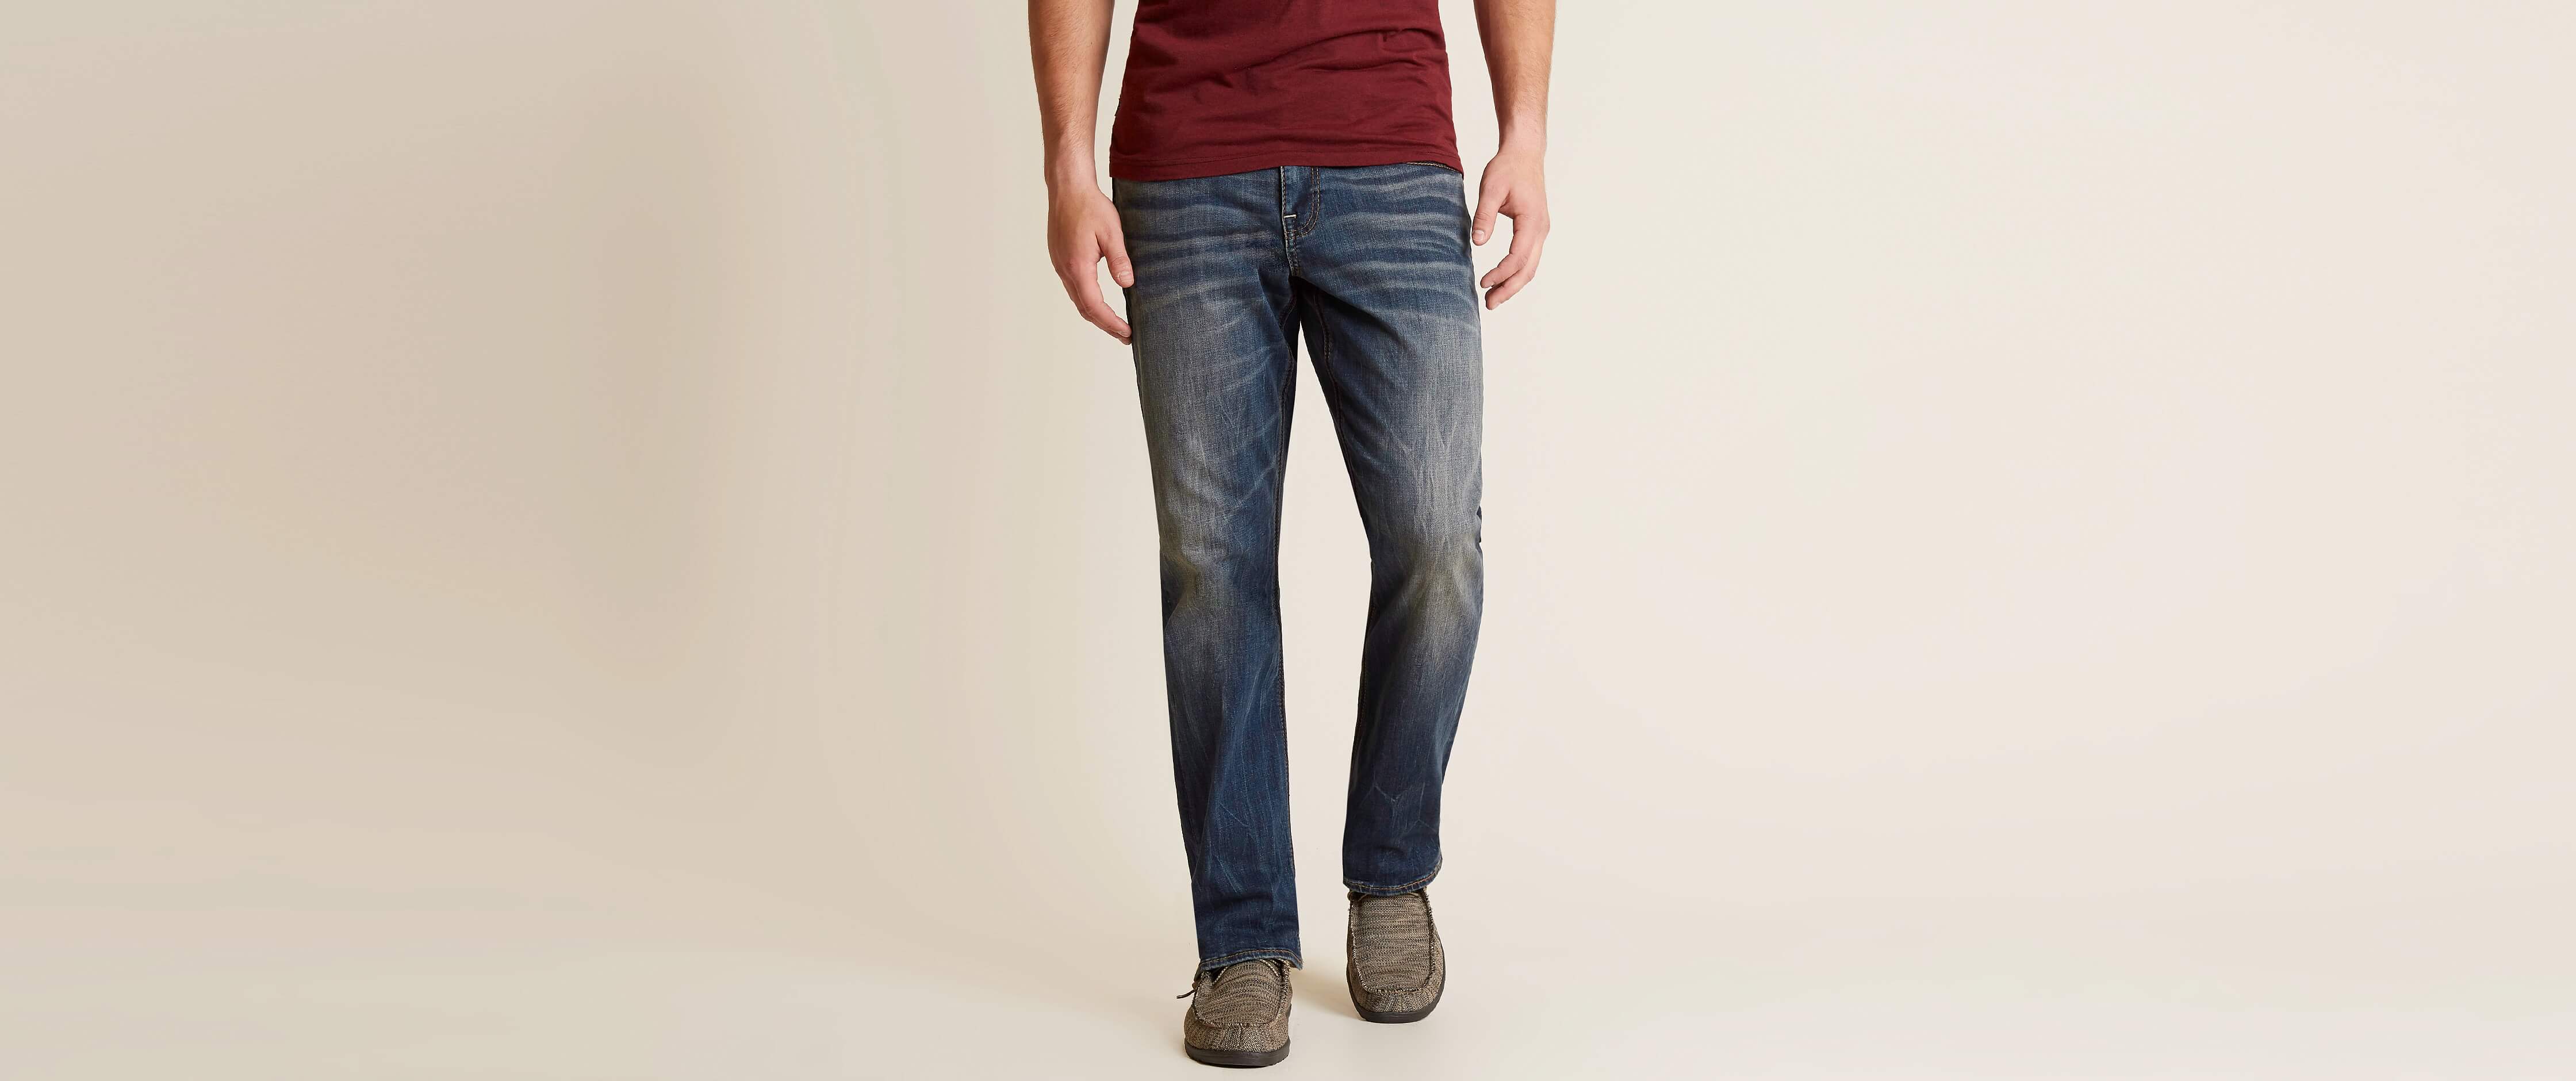 skinny jean shorts mens